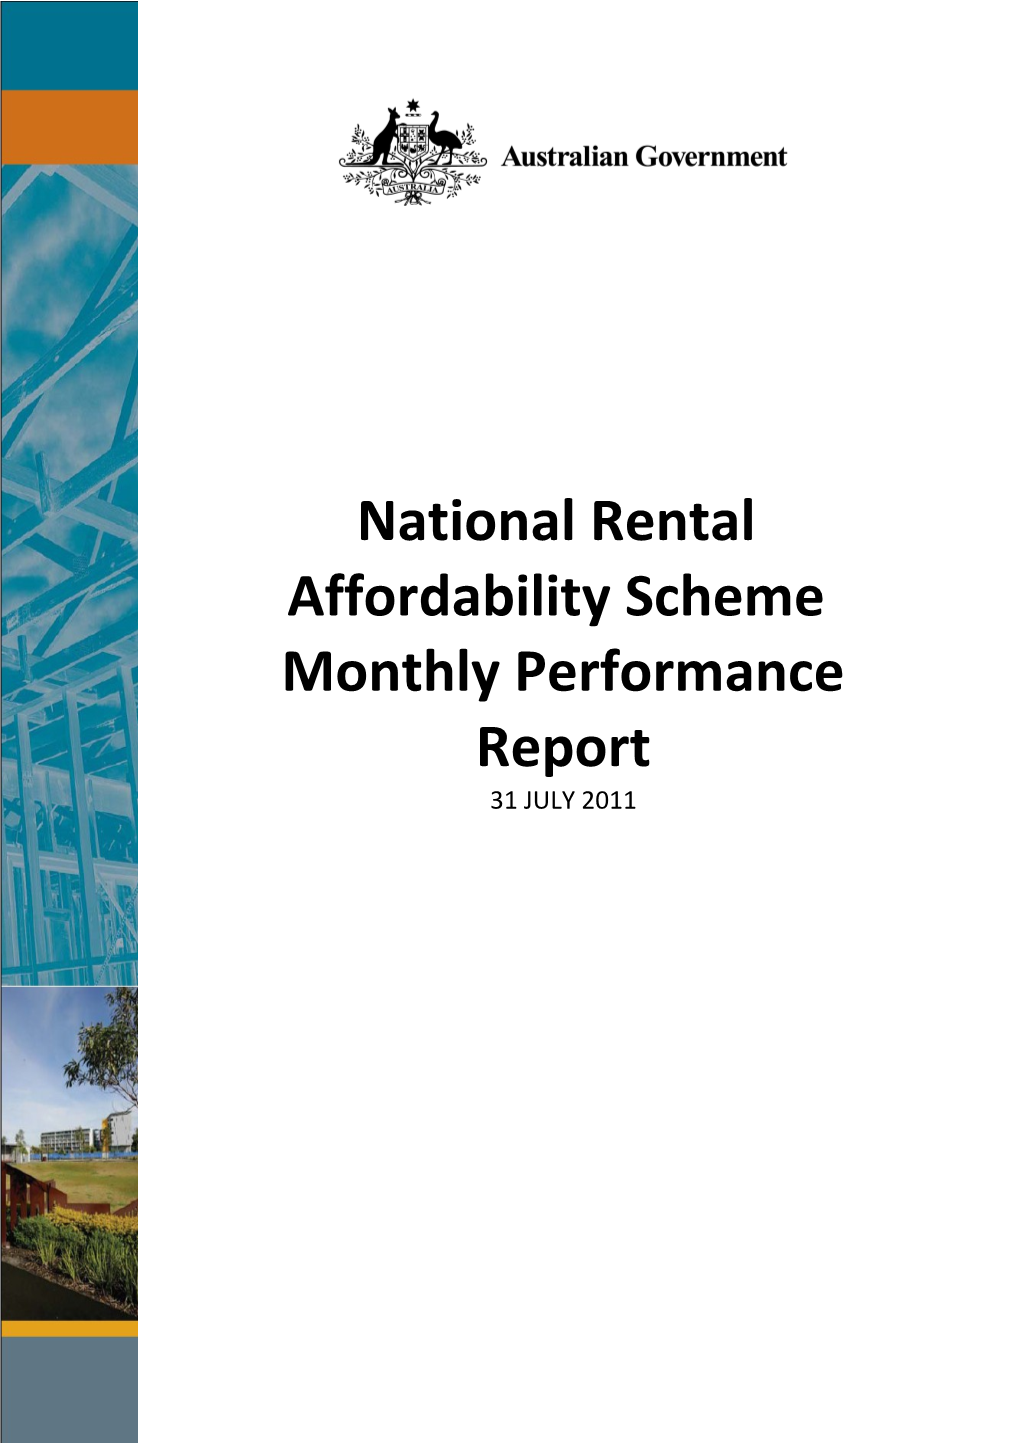 National Rental Affordability Scheme Performance Report July 2011